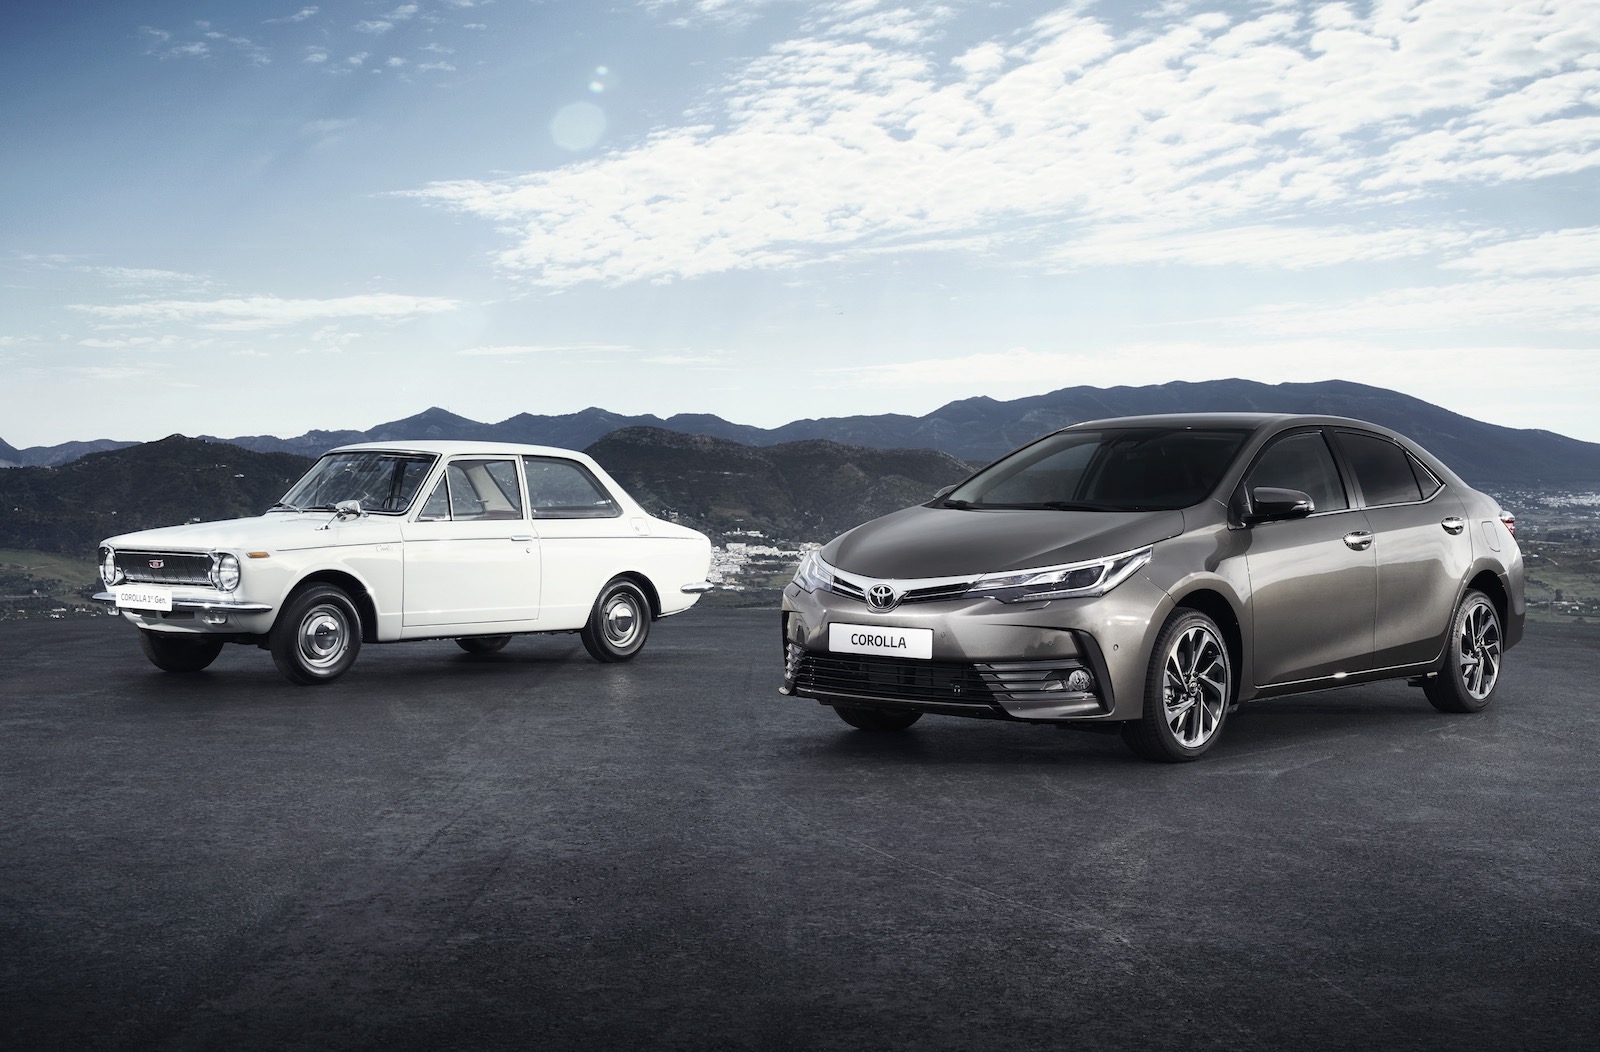 Toyota Corolla celebrates 50th anniversary this year